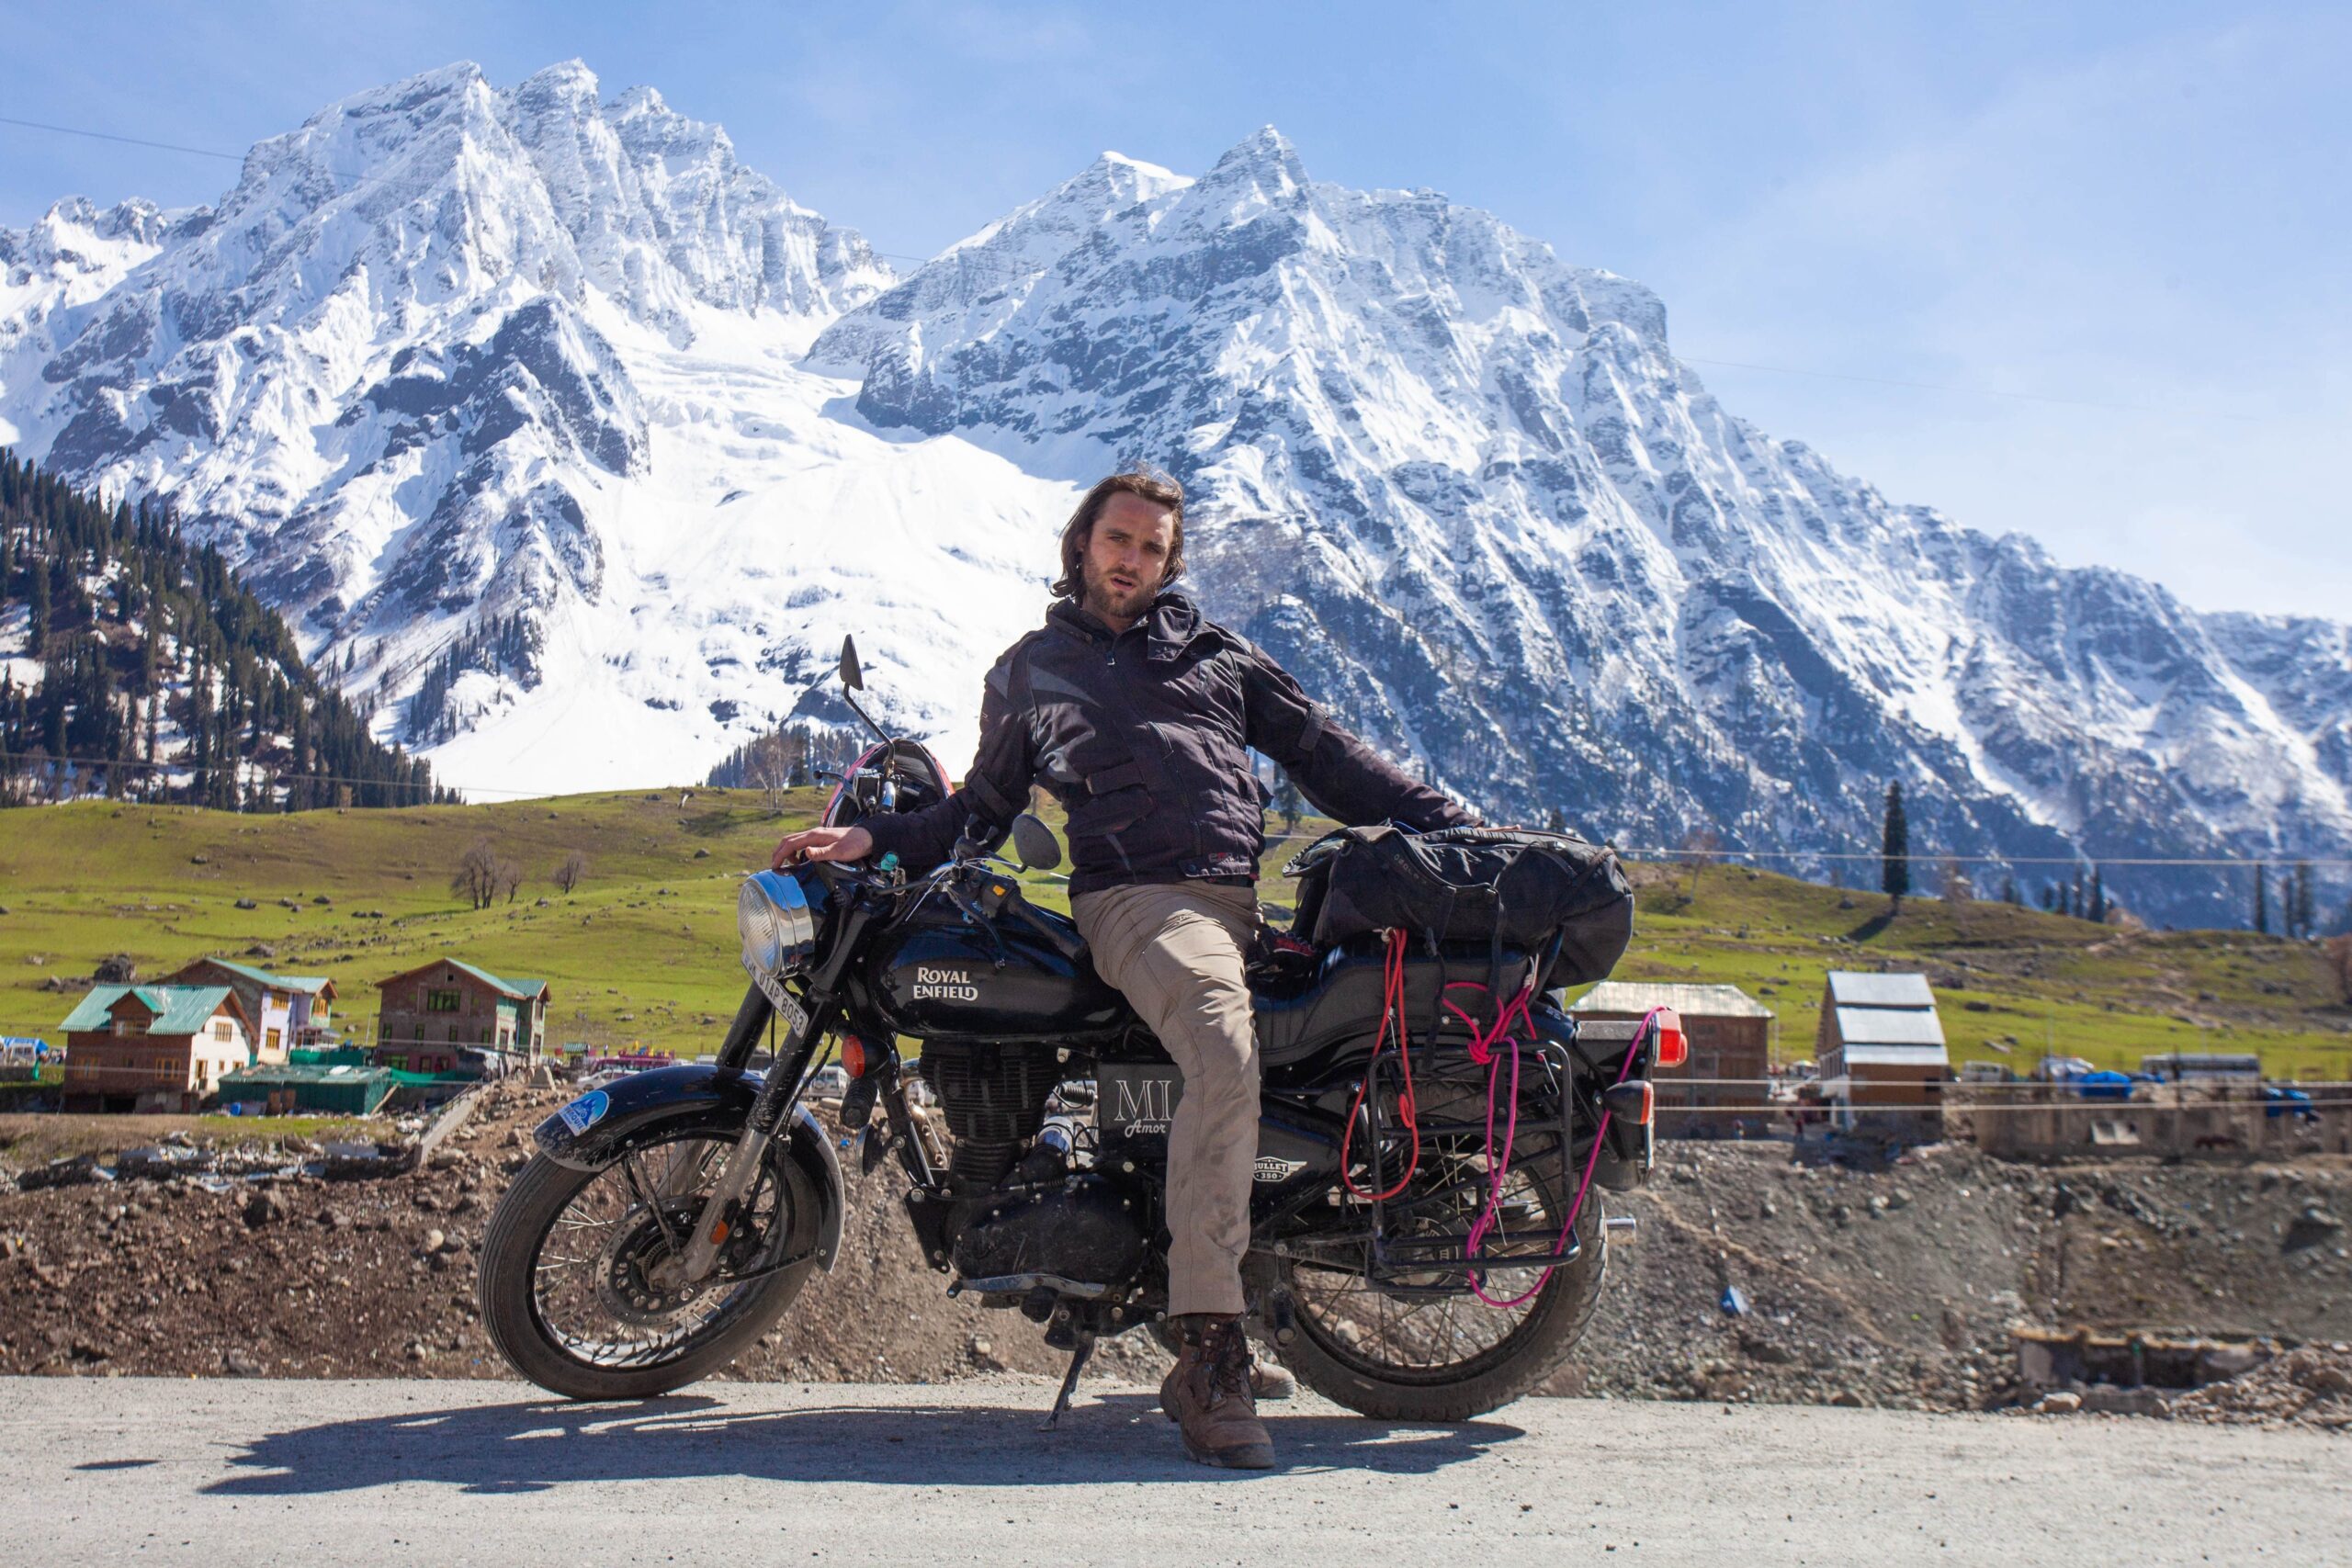 Srinagar Bike Rental: Your Ticket to Two-Wheeled Adventures